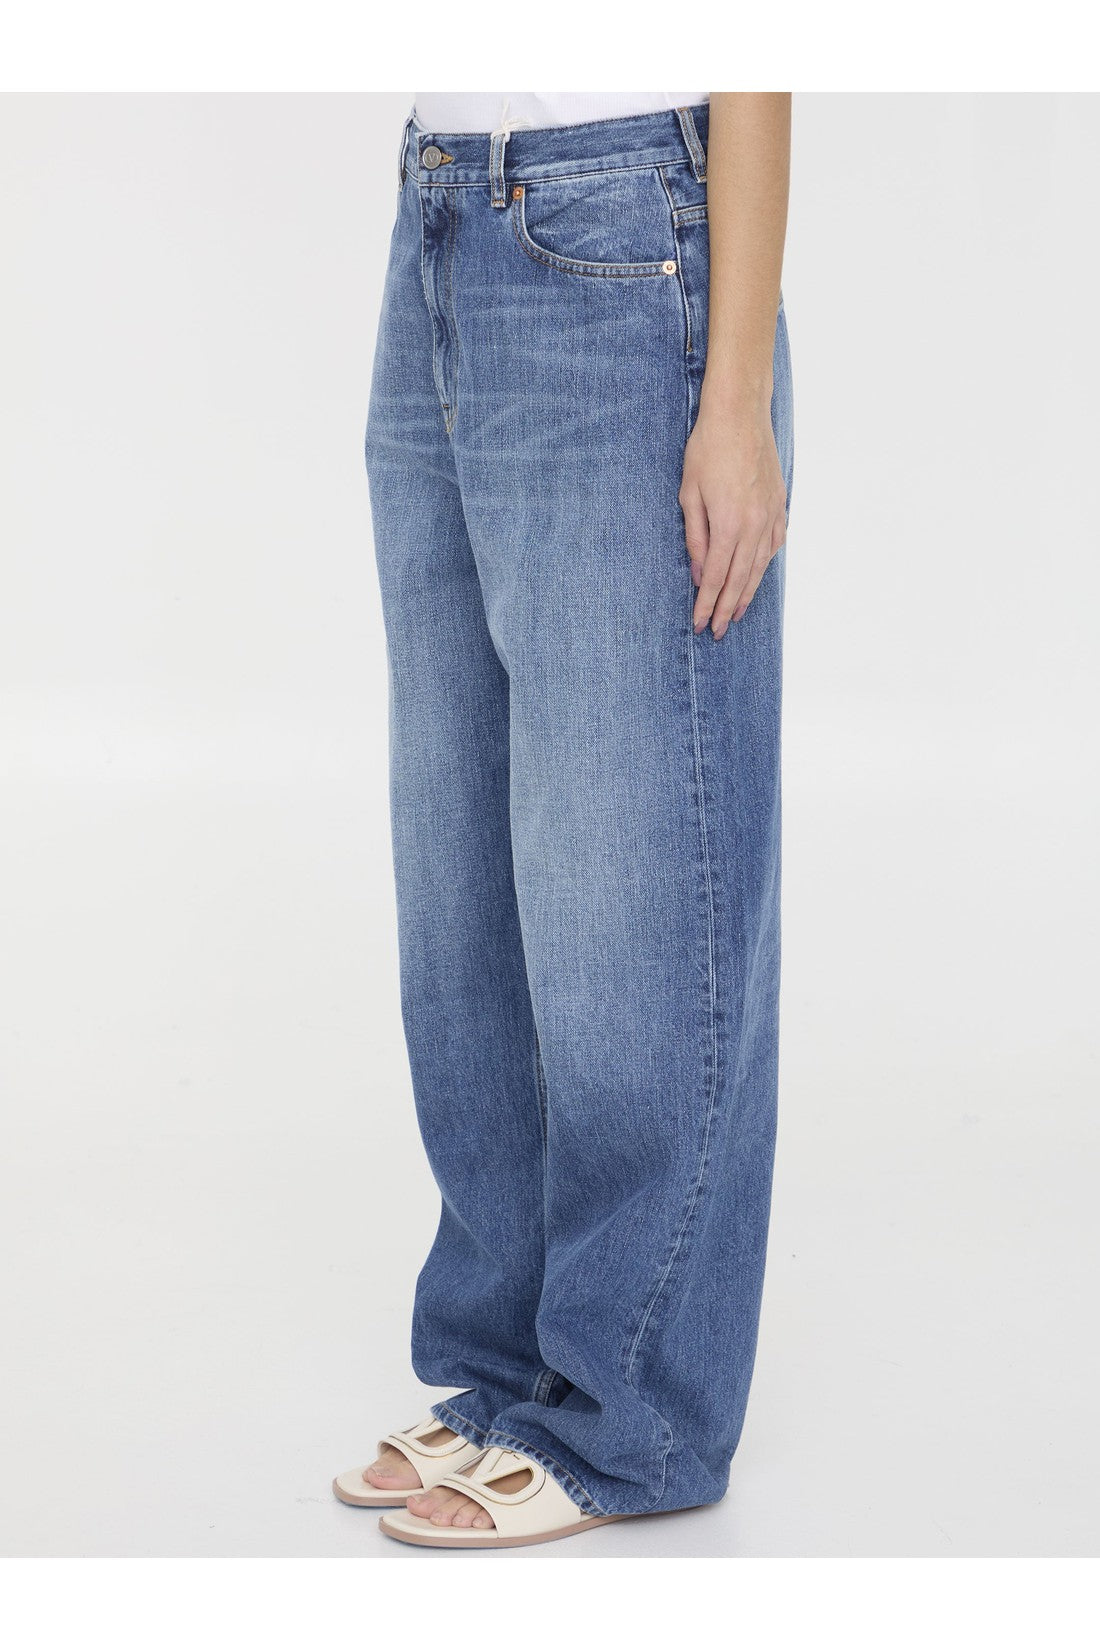 Medium Blue Denim jeans